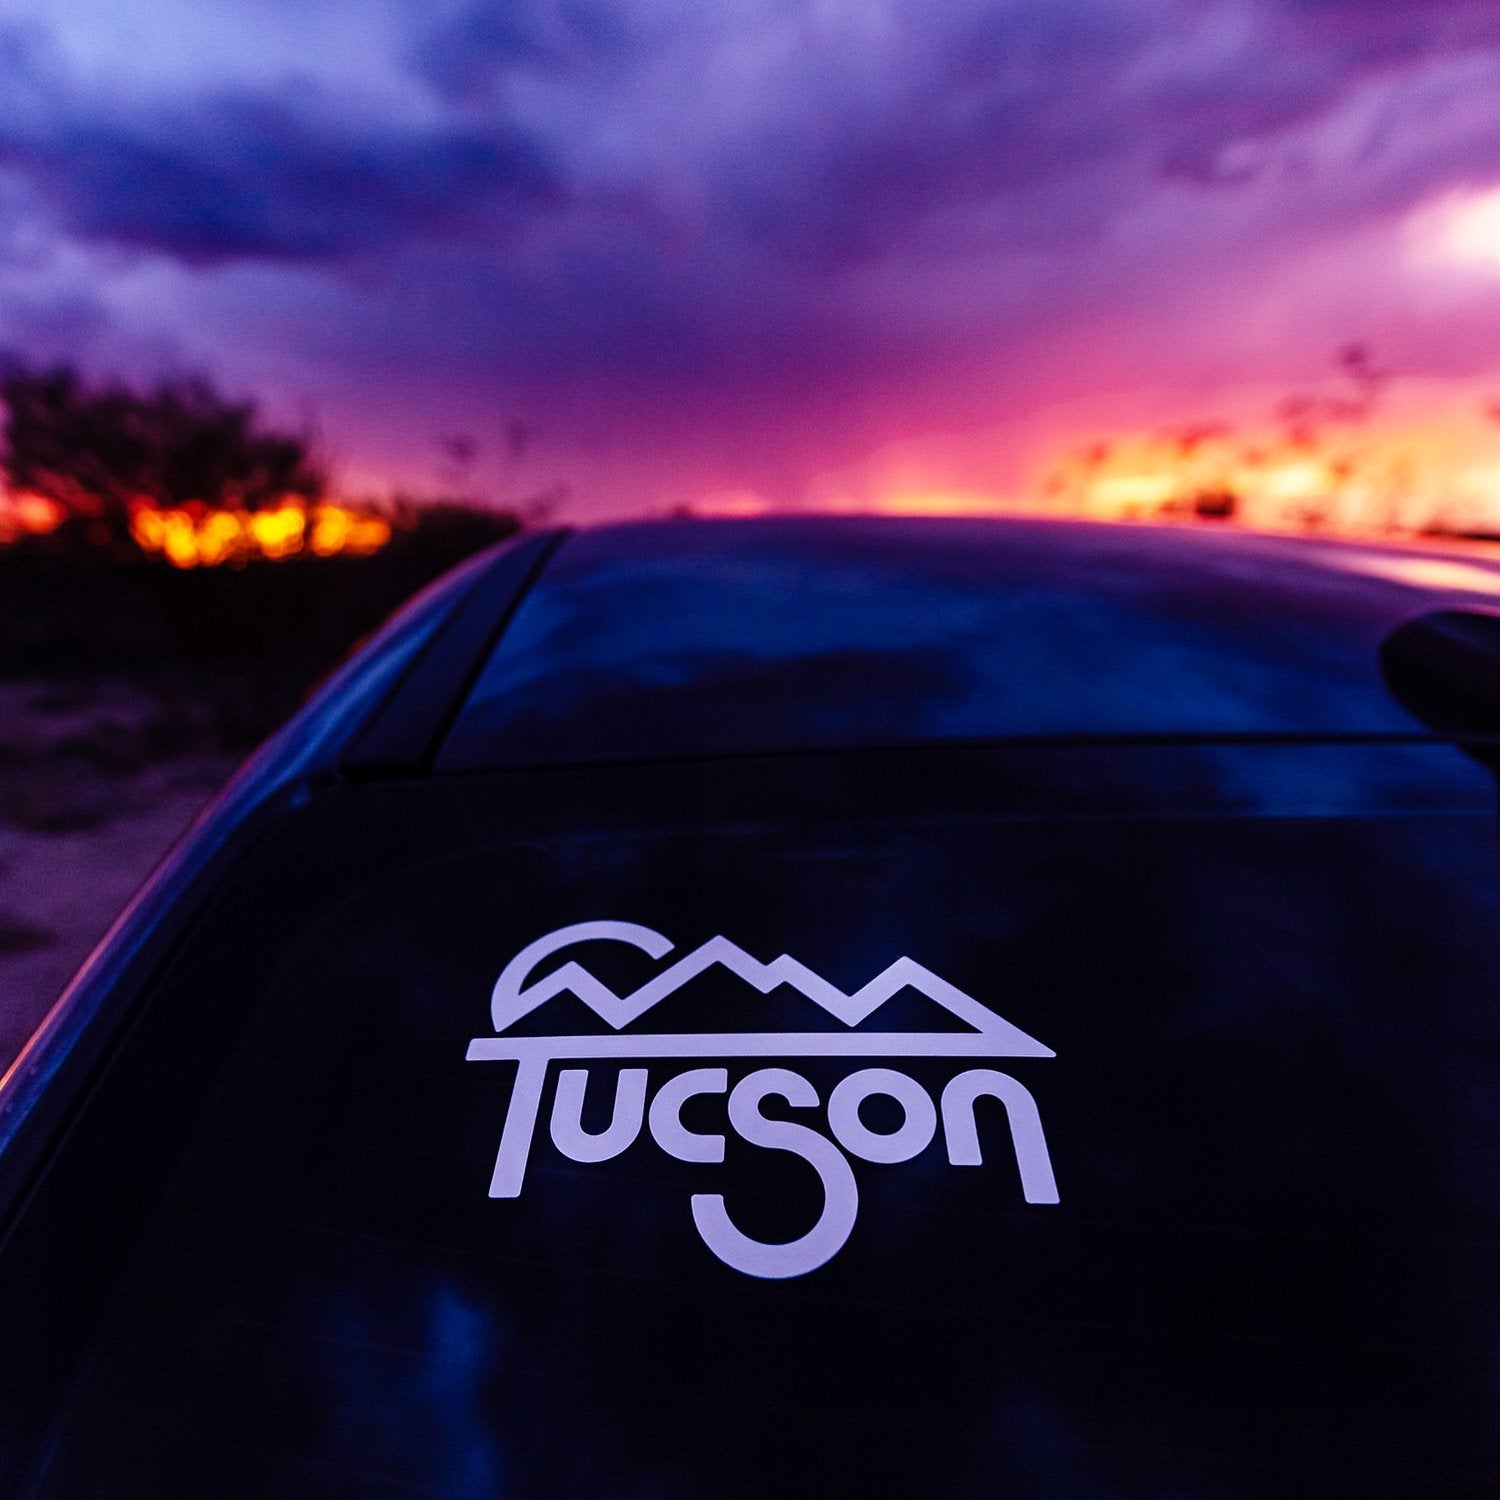 Tucson Car Decal